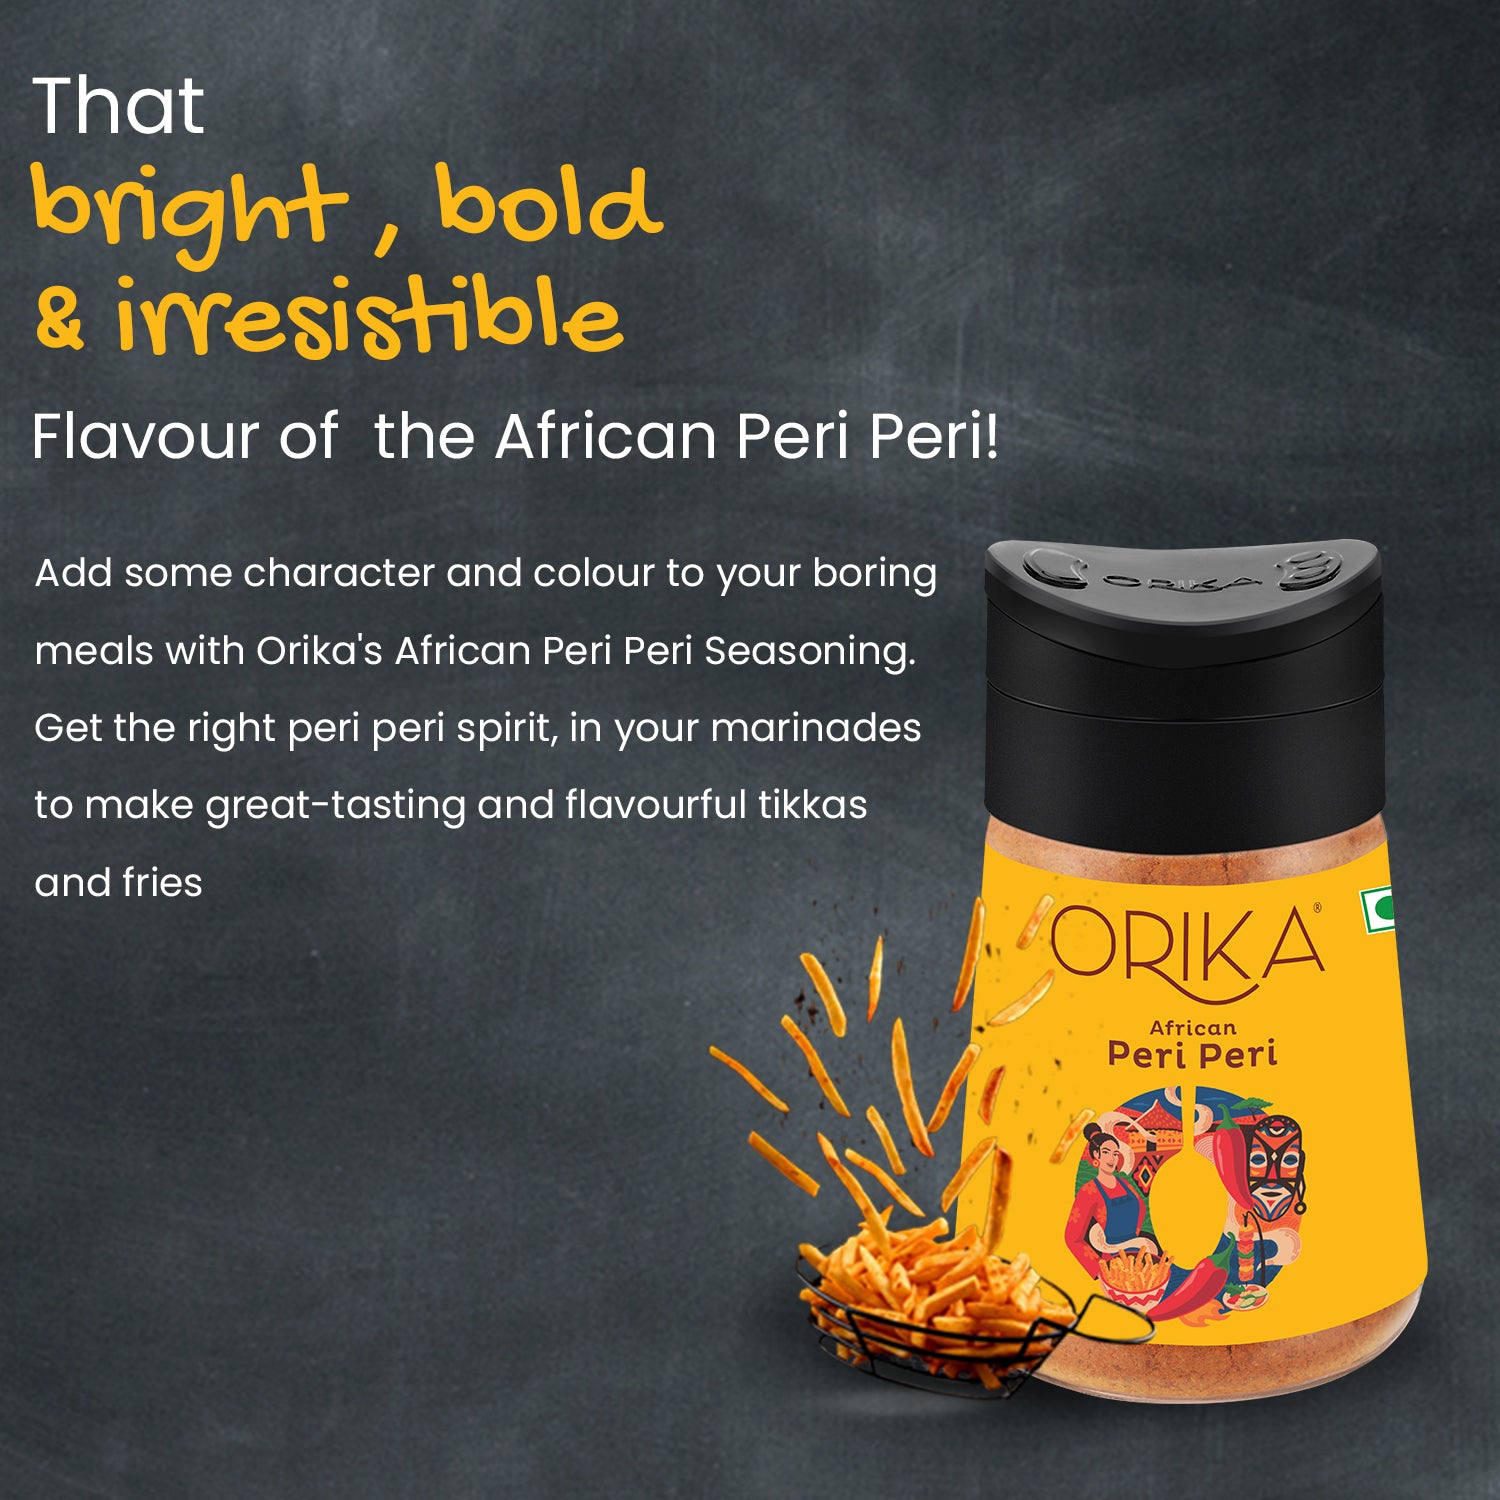 Orika African Peri Peri Sprinkler, 75g - Orika Spices India